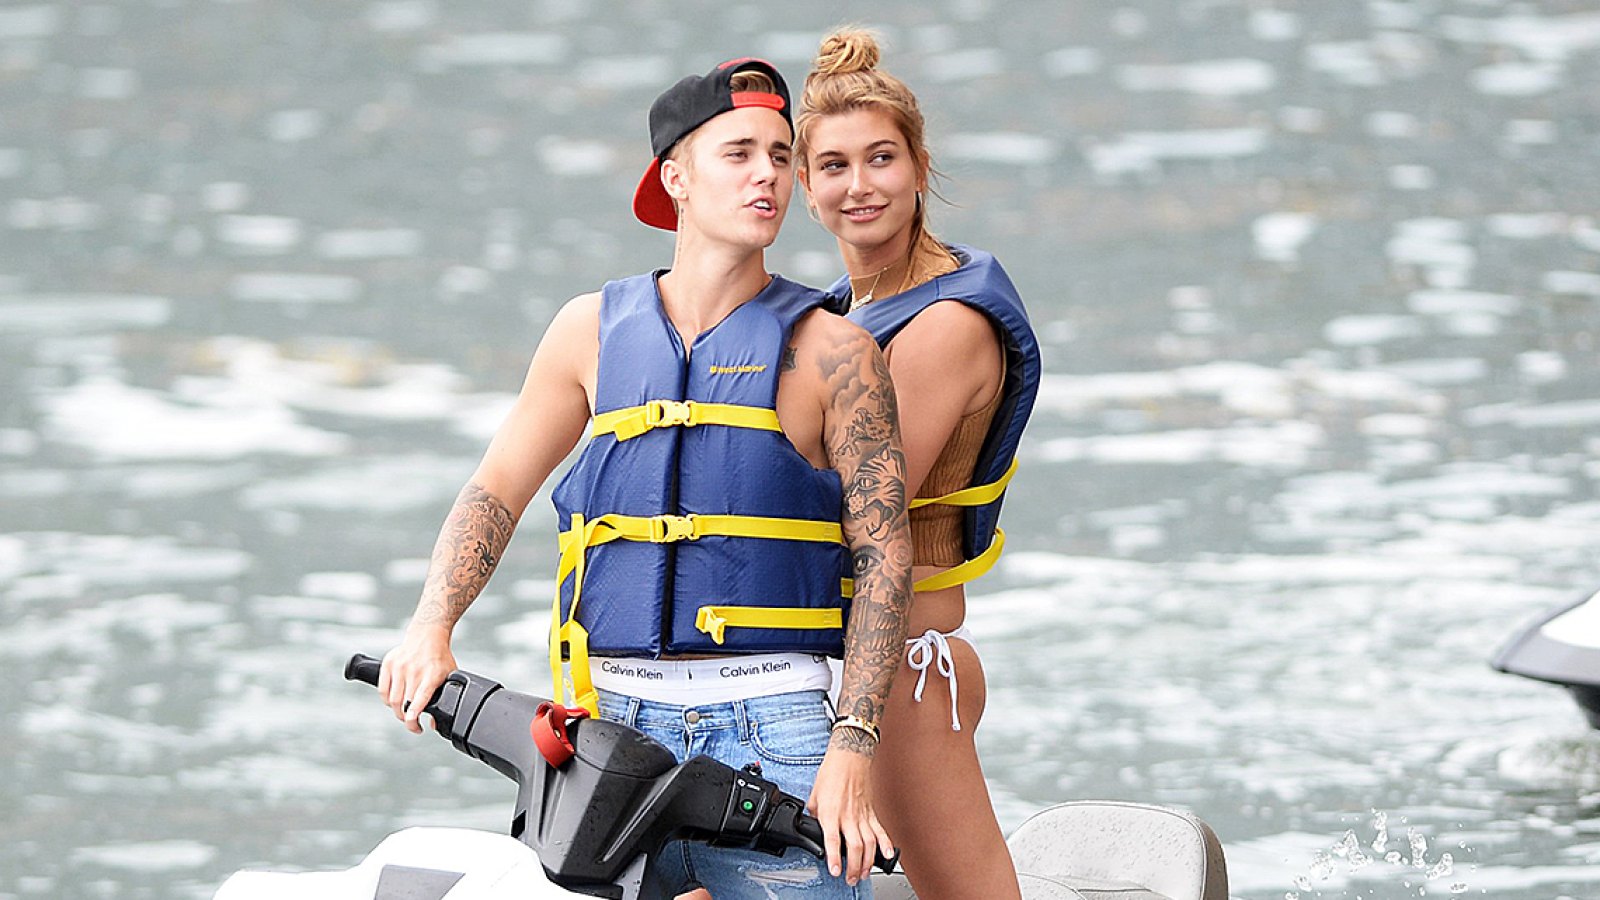 Justin Bieber and Hailey Baldwin jet skiing in Miami